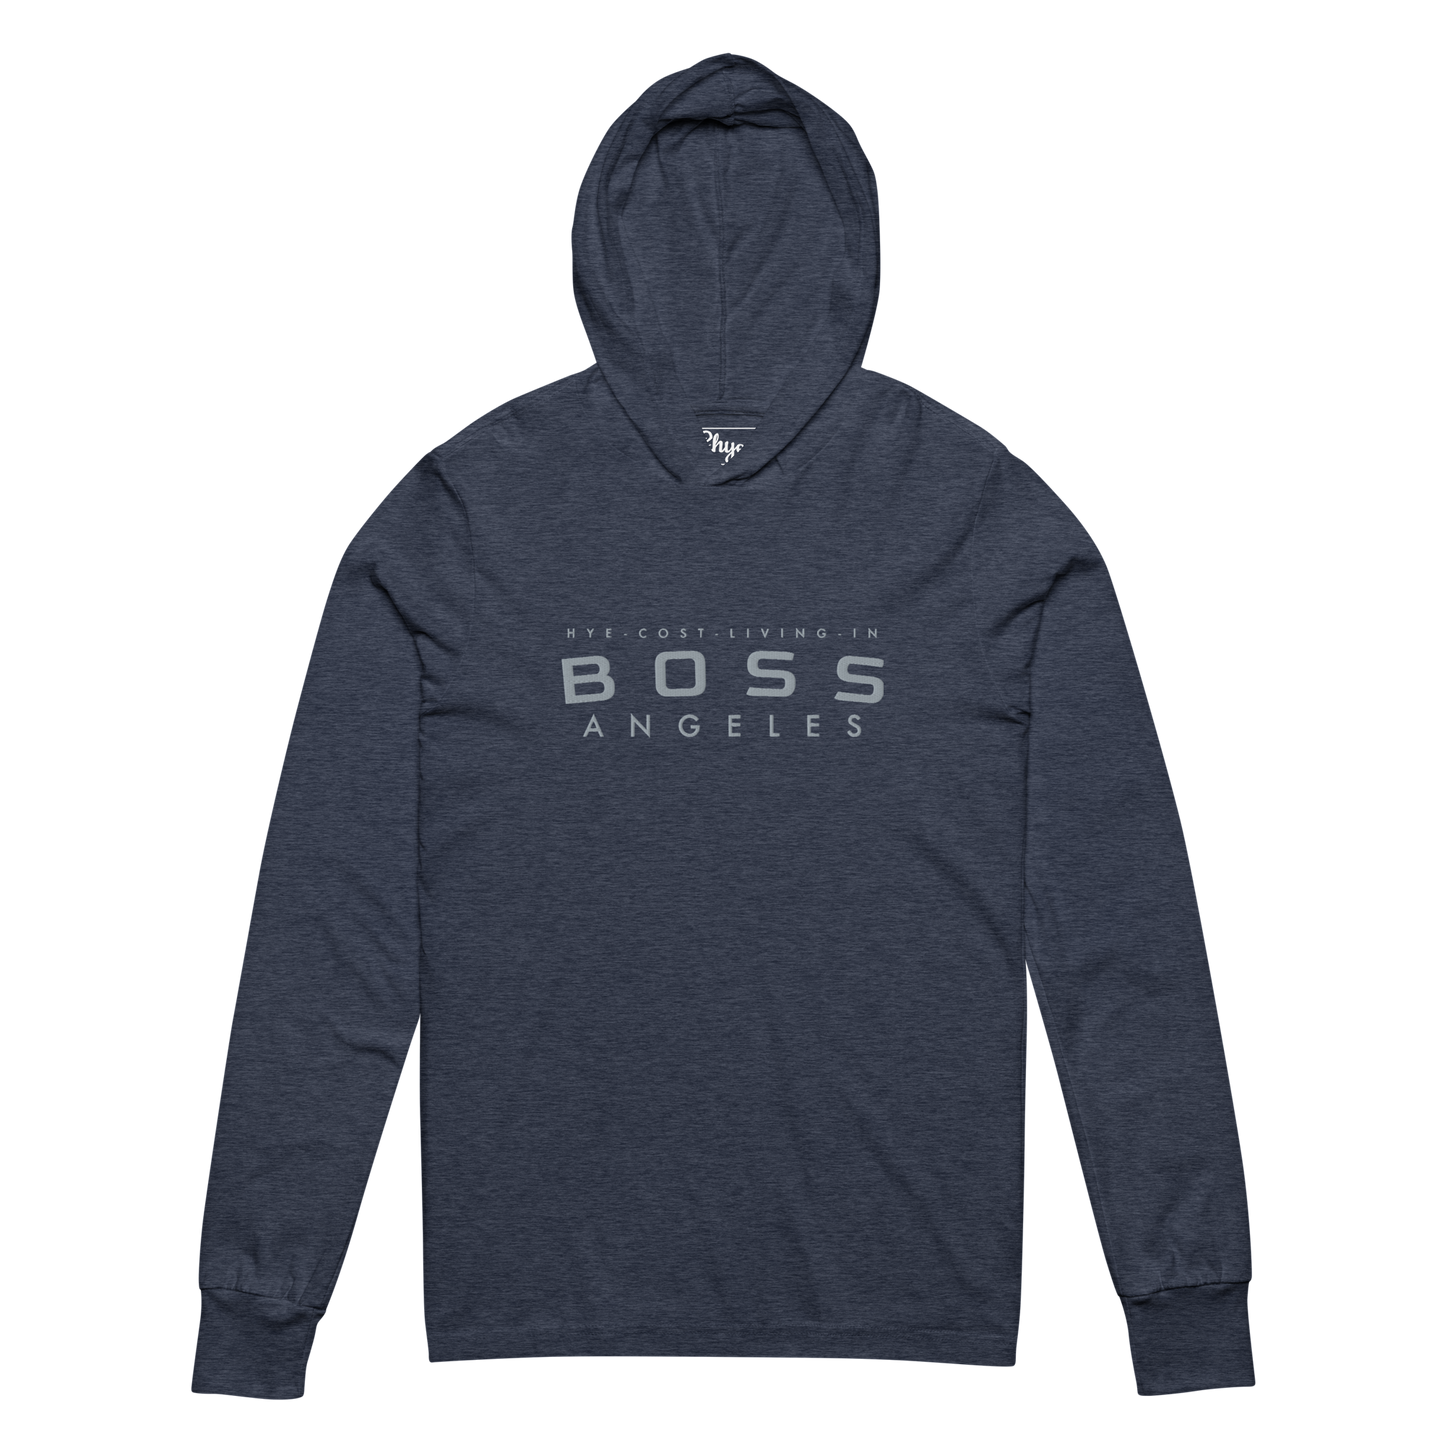 2-Hye: Boss Angeles Hooded Long-Sleeve Top